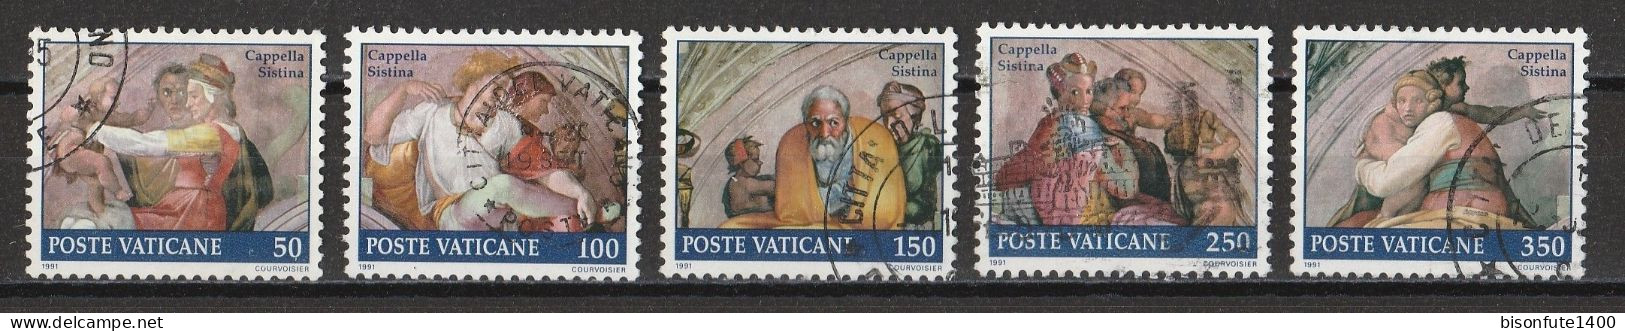 Vatican 1991 : Timbres Yvert & Tellier N° 891 - 892 - 893 - 894 - 895 - 897 - 898 - 899 - 900 Et 901 Oblitérés. - Gebraucht